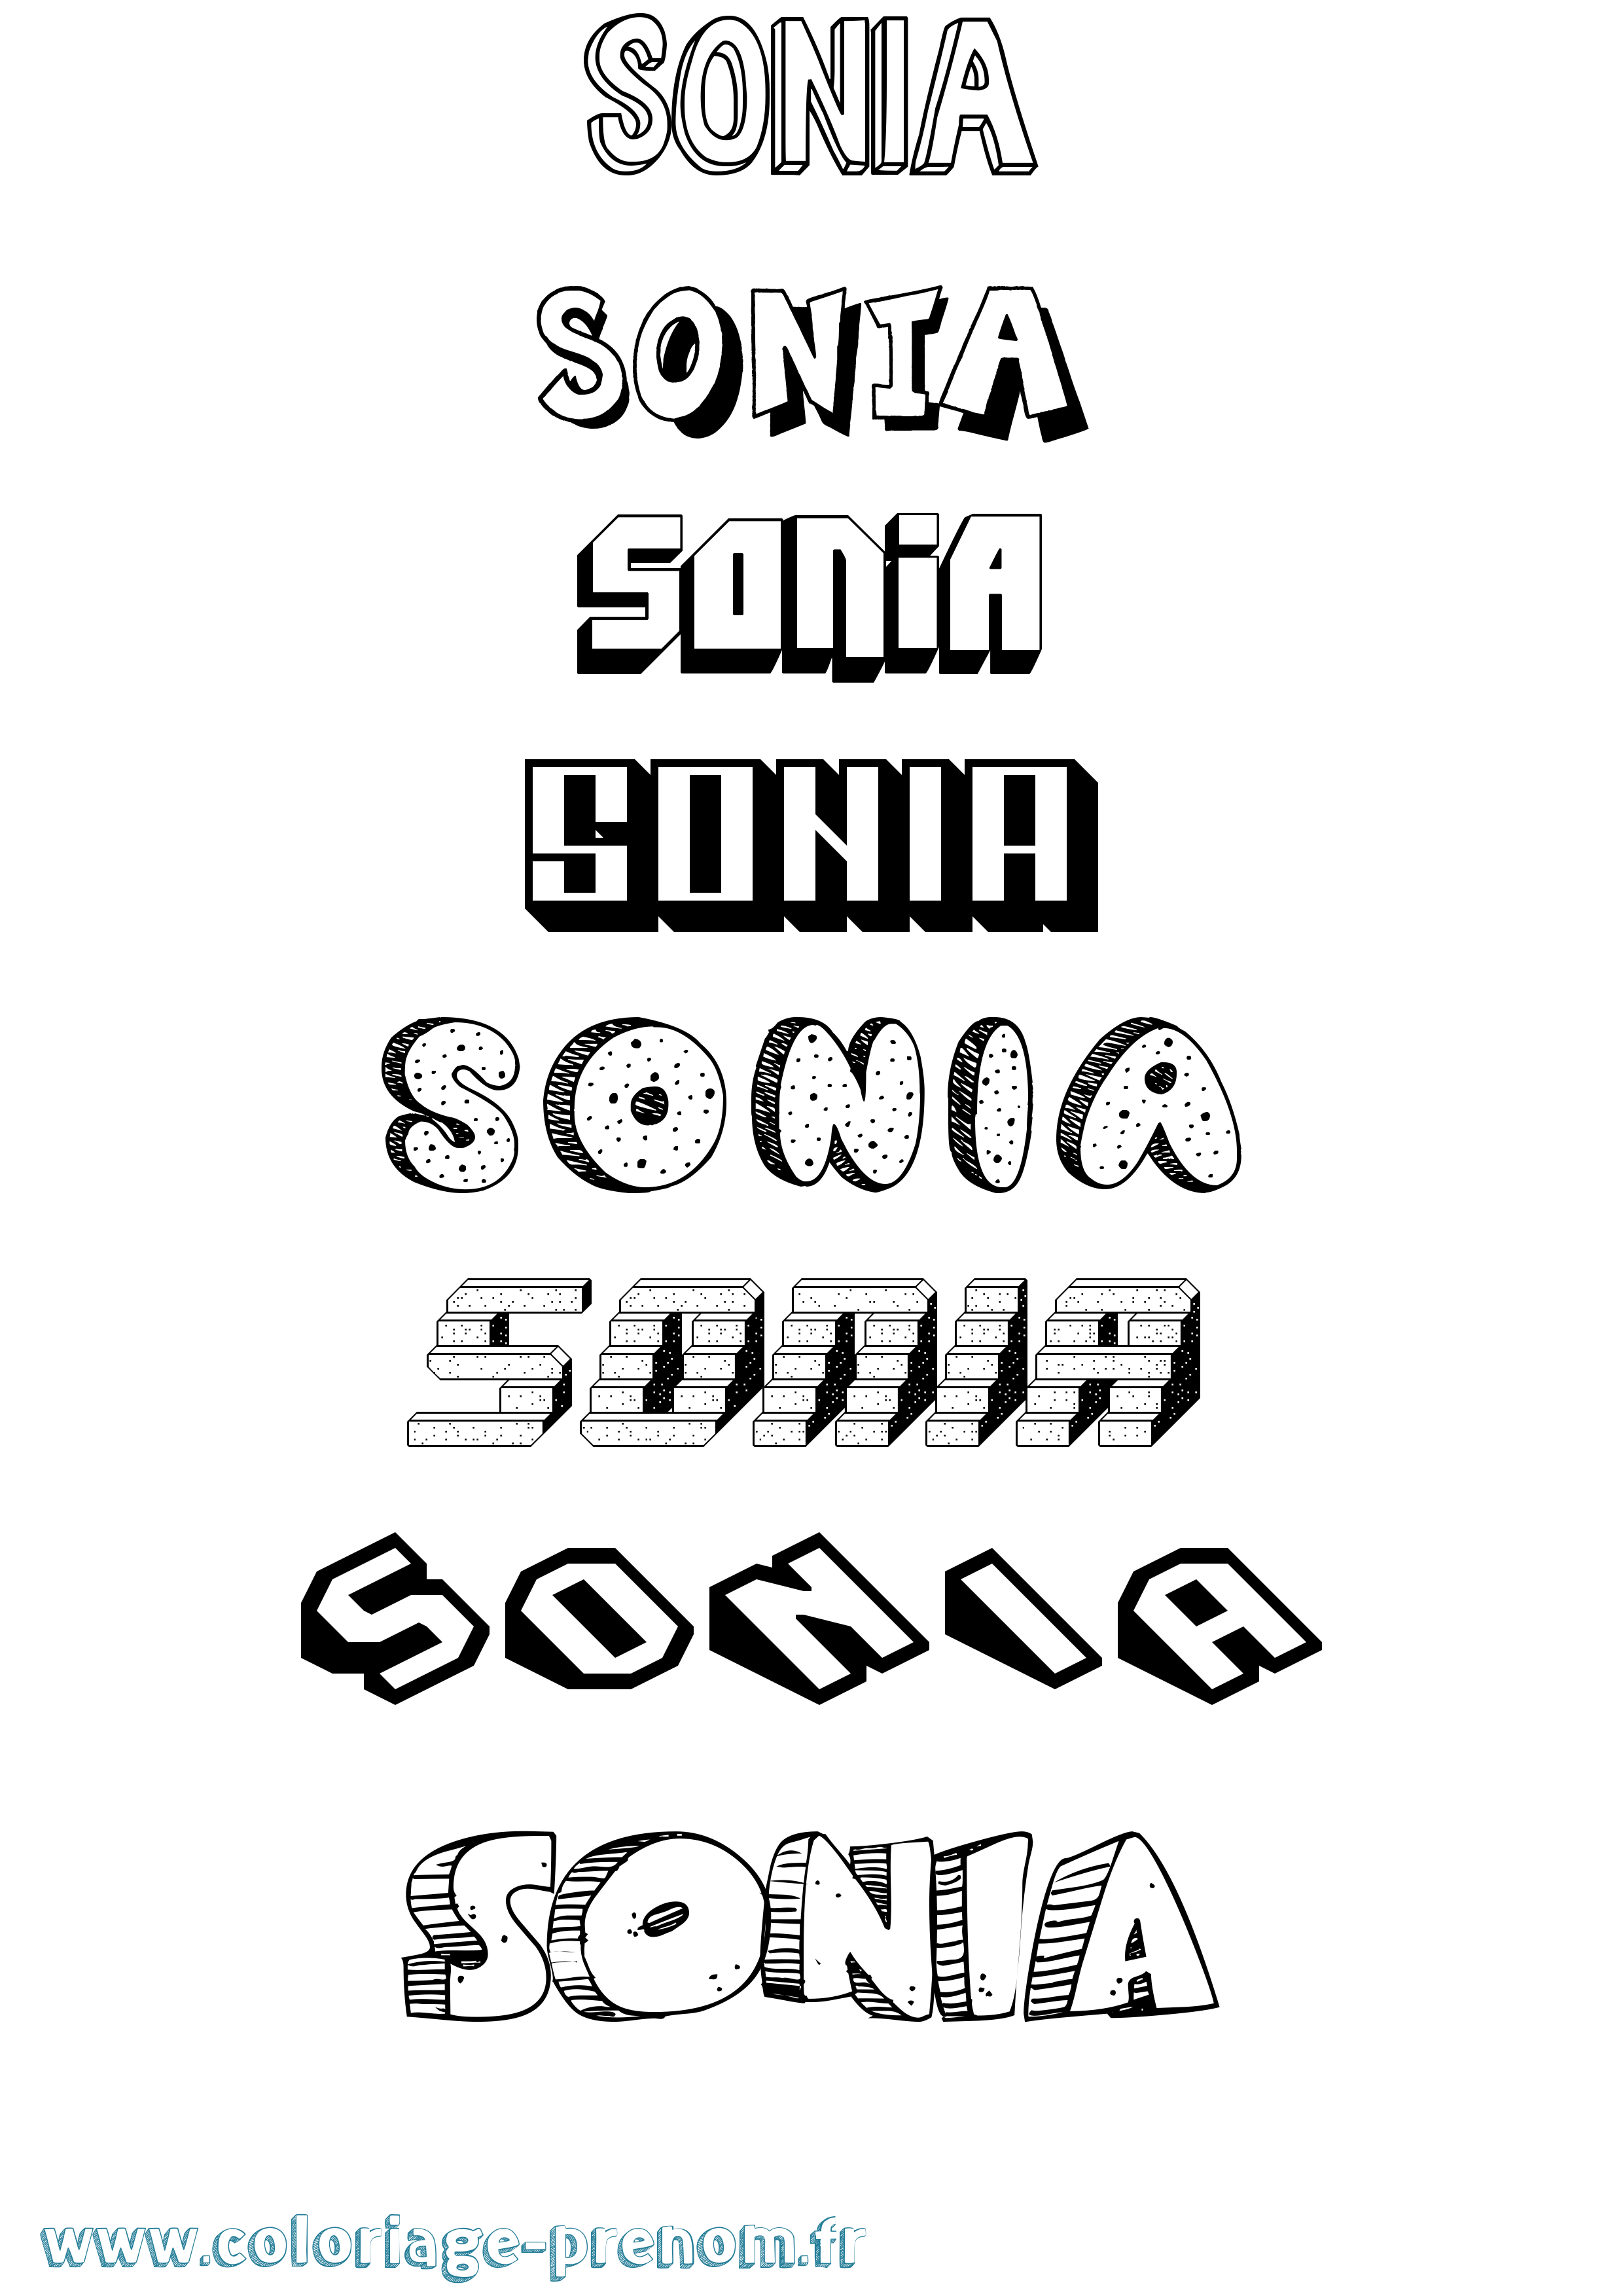 Coloriage prénom Sonia Effet 3D